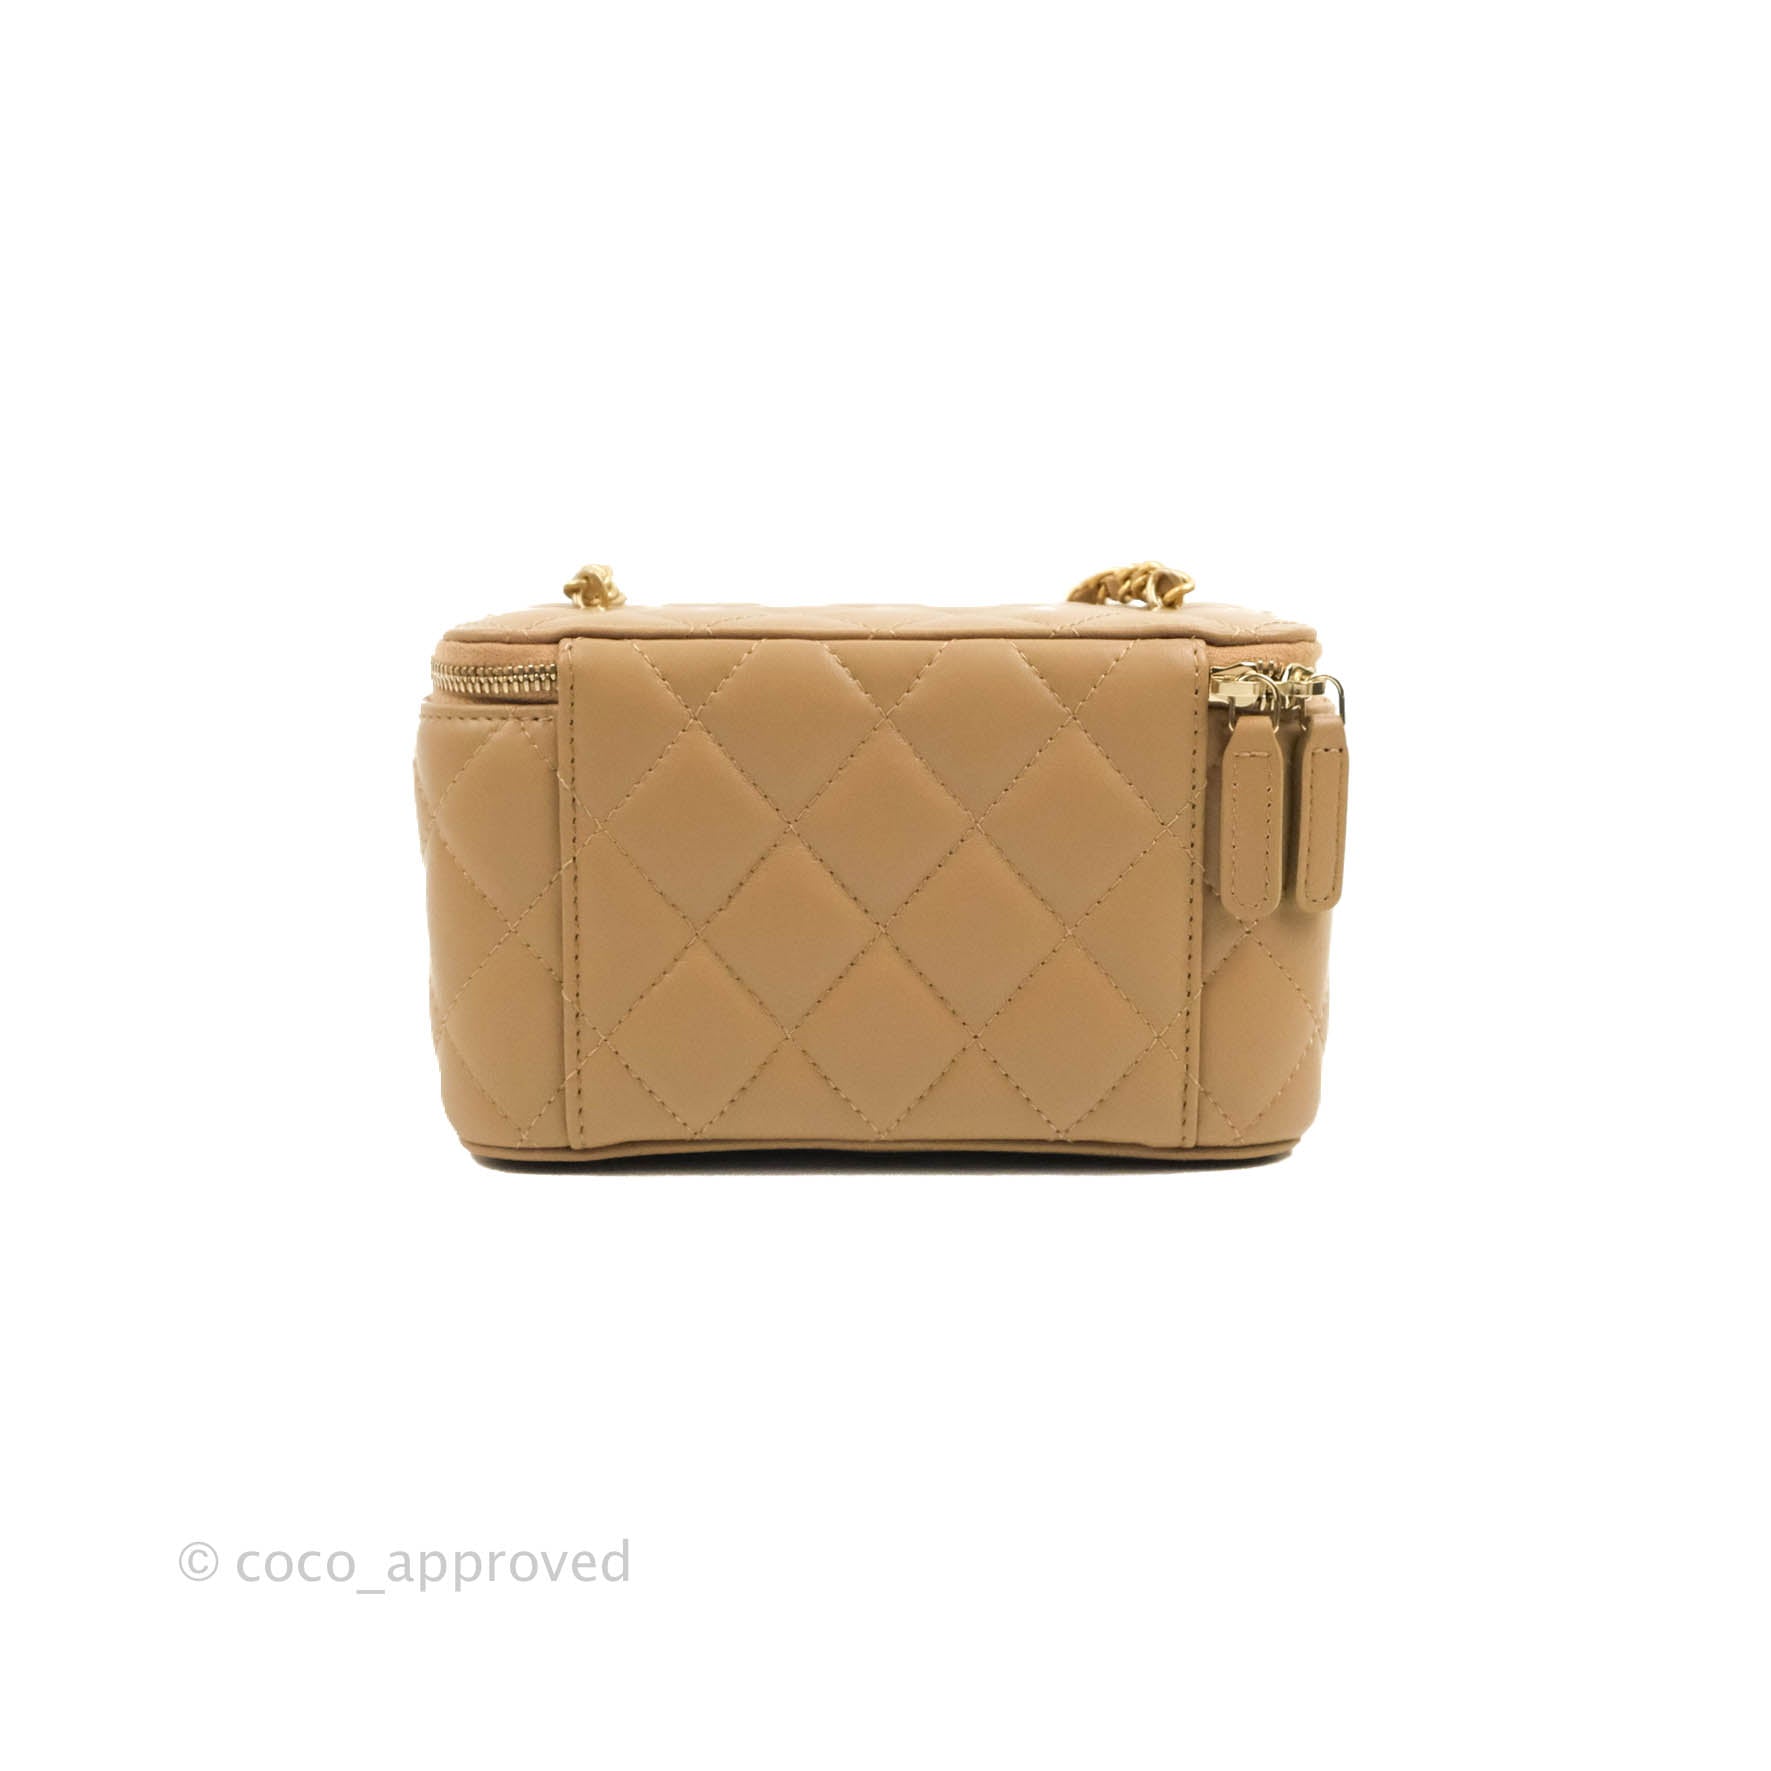 Handbags Chanel Chanel Classic Yellow Mini Clutch